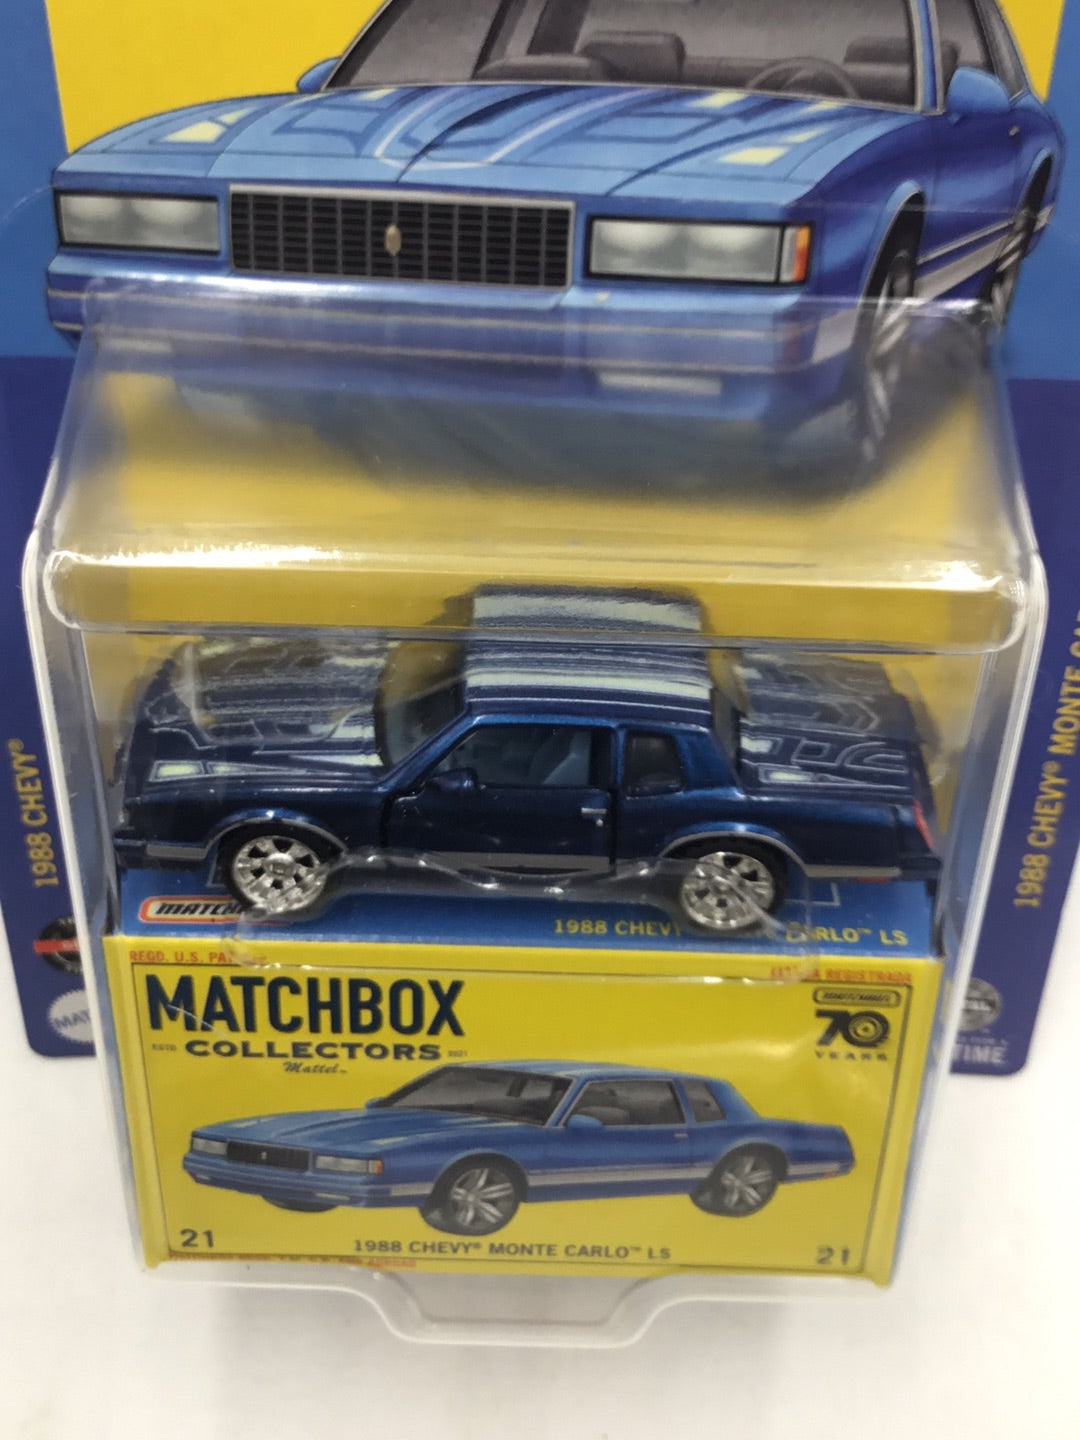 2023 matchbox Collectors #21 1988 Chevy Monte Carlo 21/22